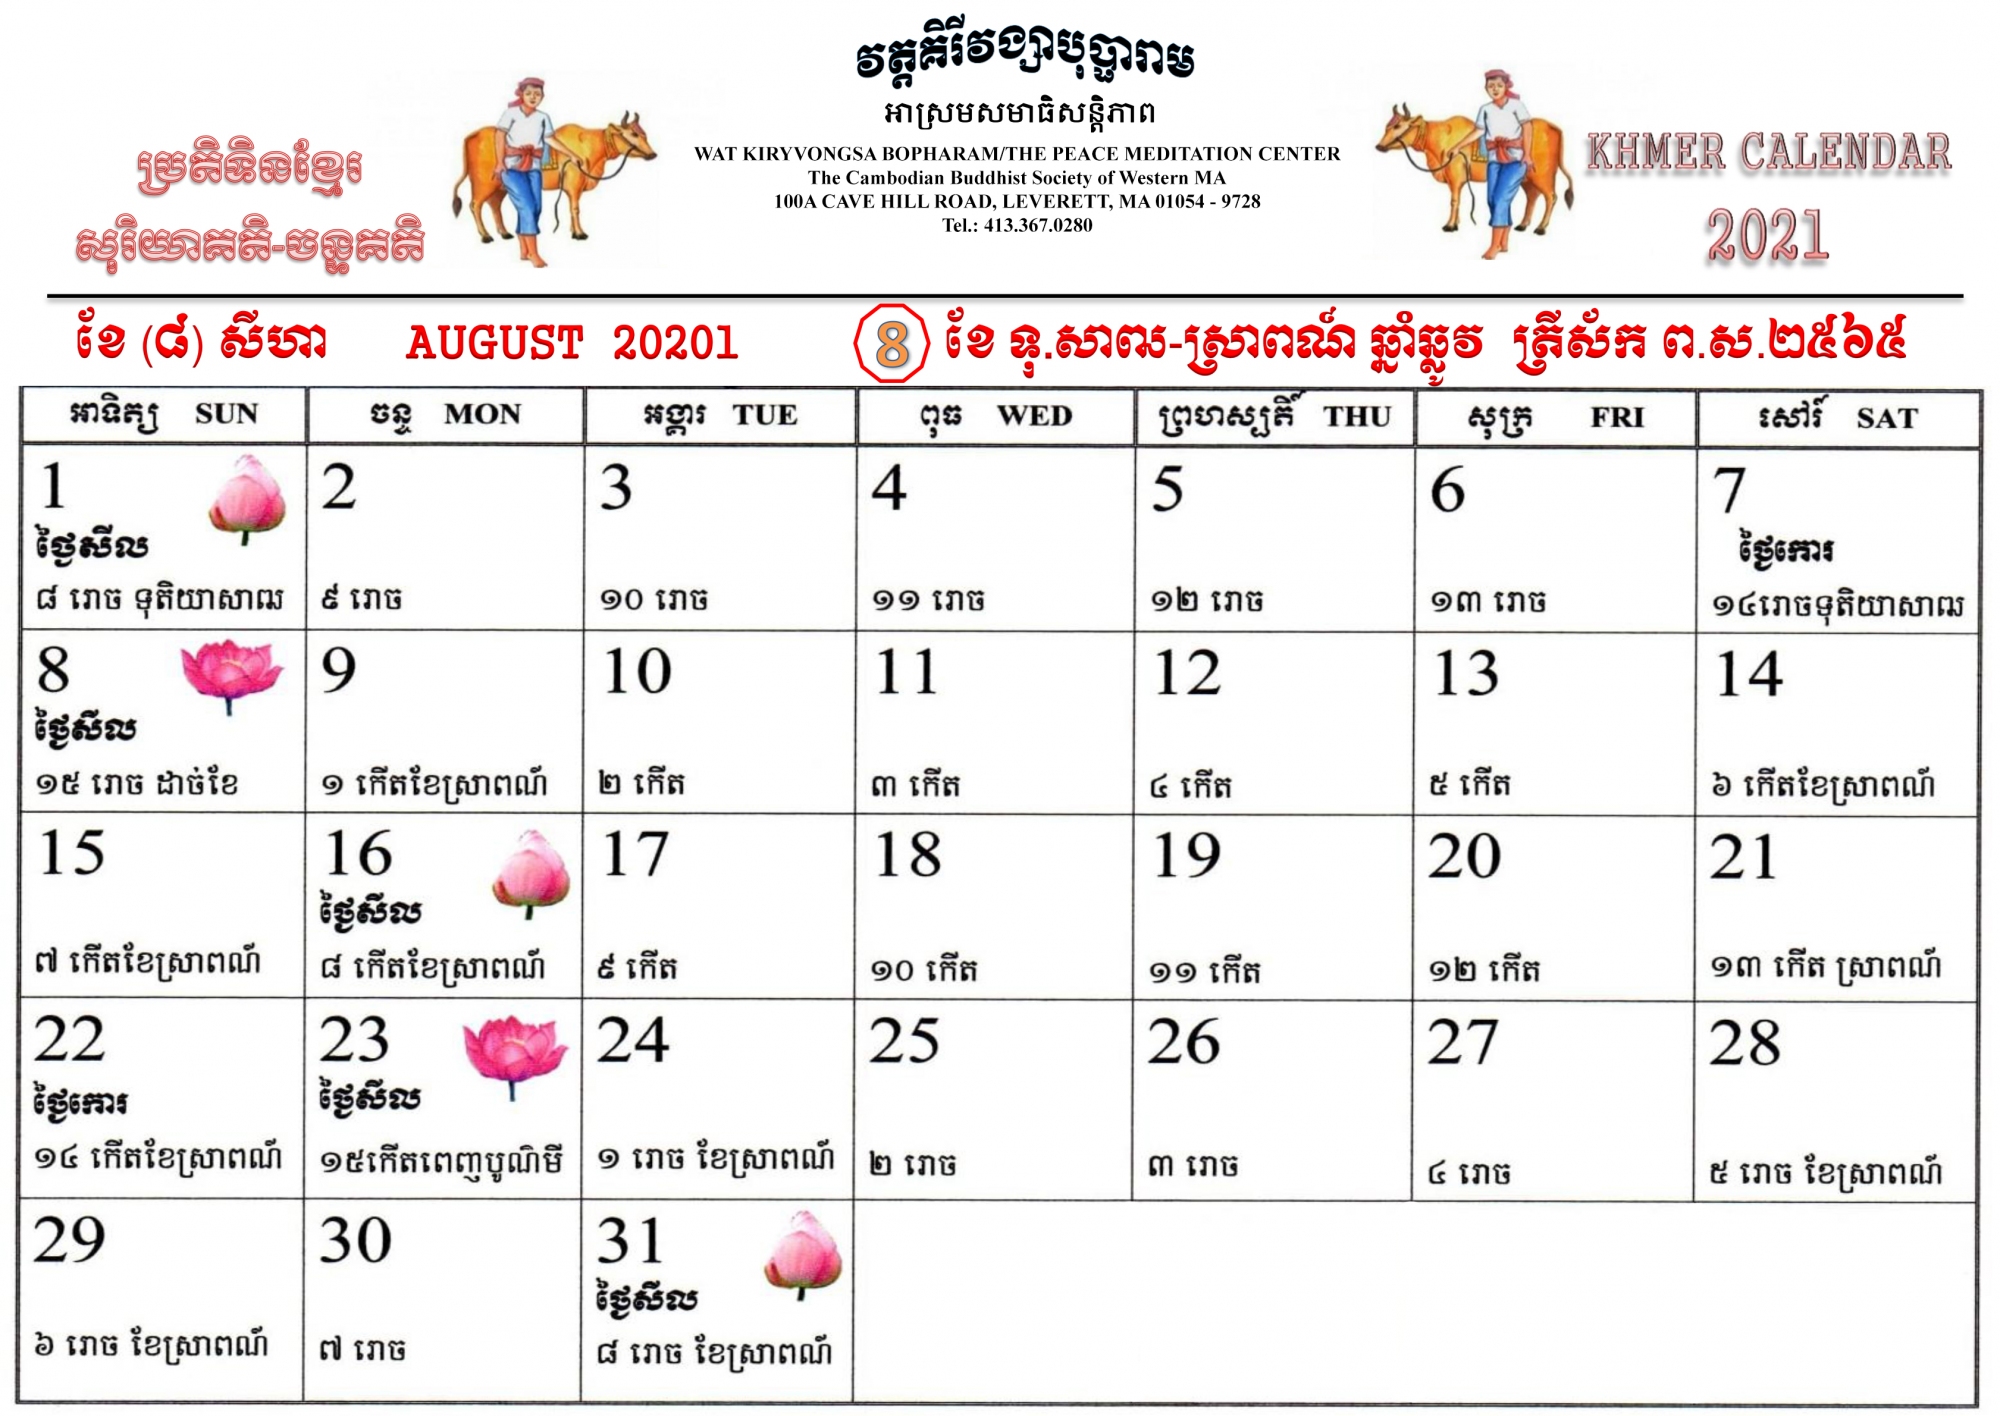 Free Copy: The 2565 2021 Khmer Calendar - Templenews